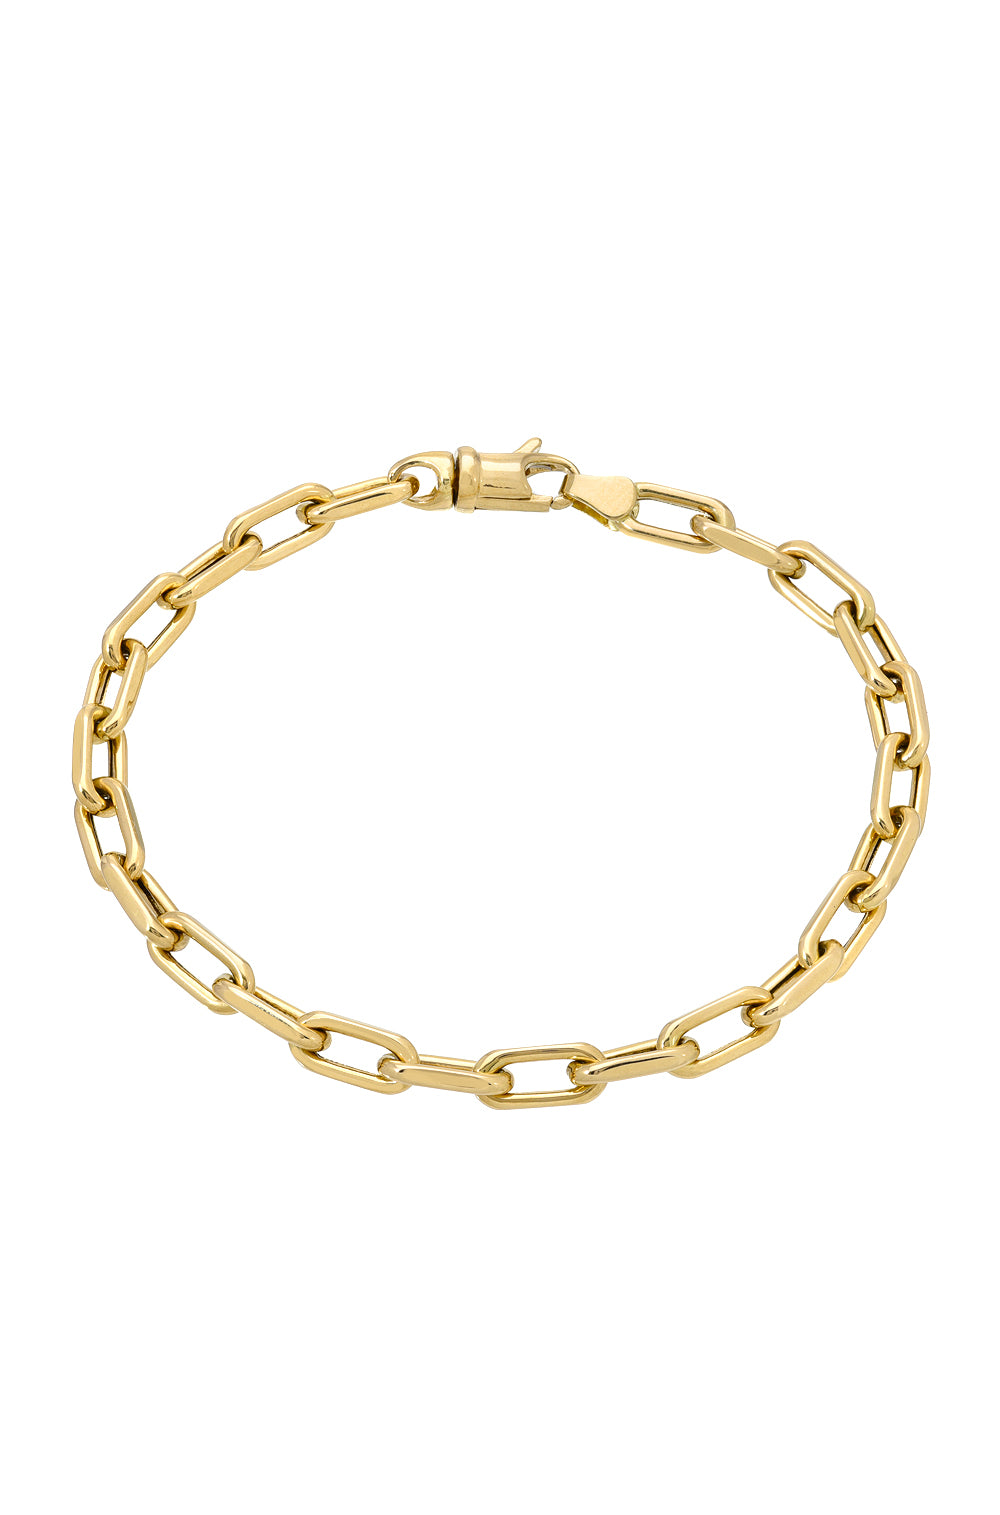 14K Gold Large Open Link Chain Bracelet